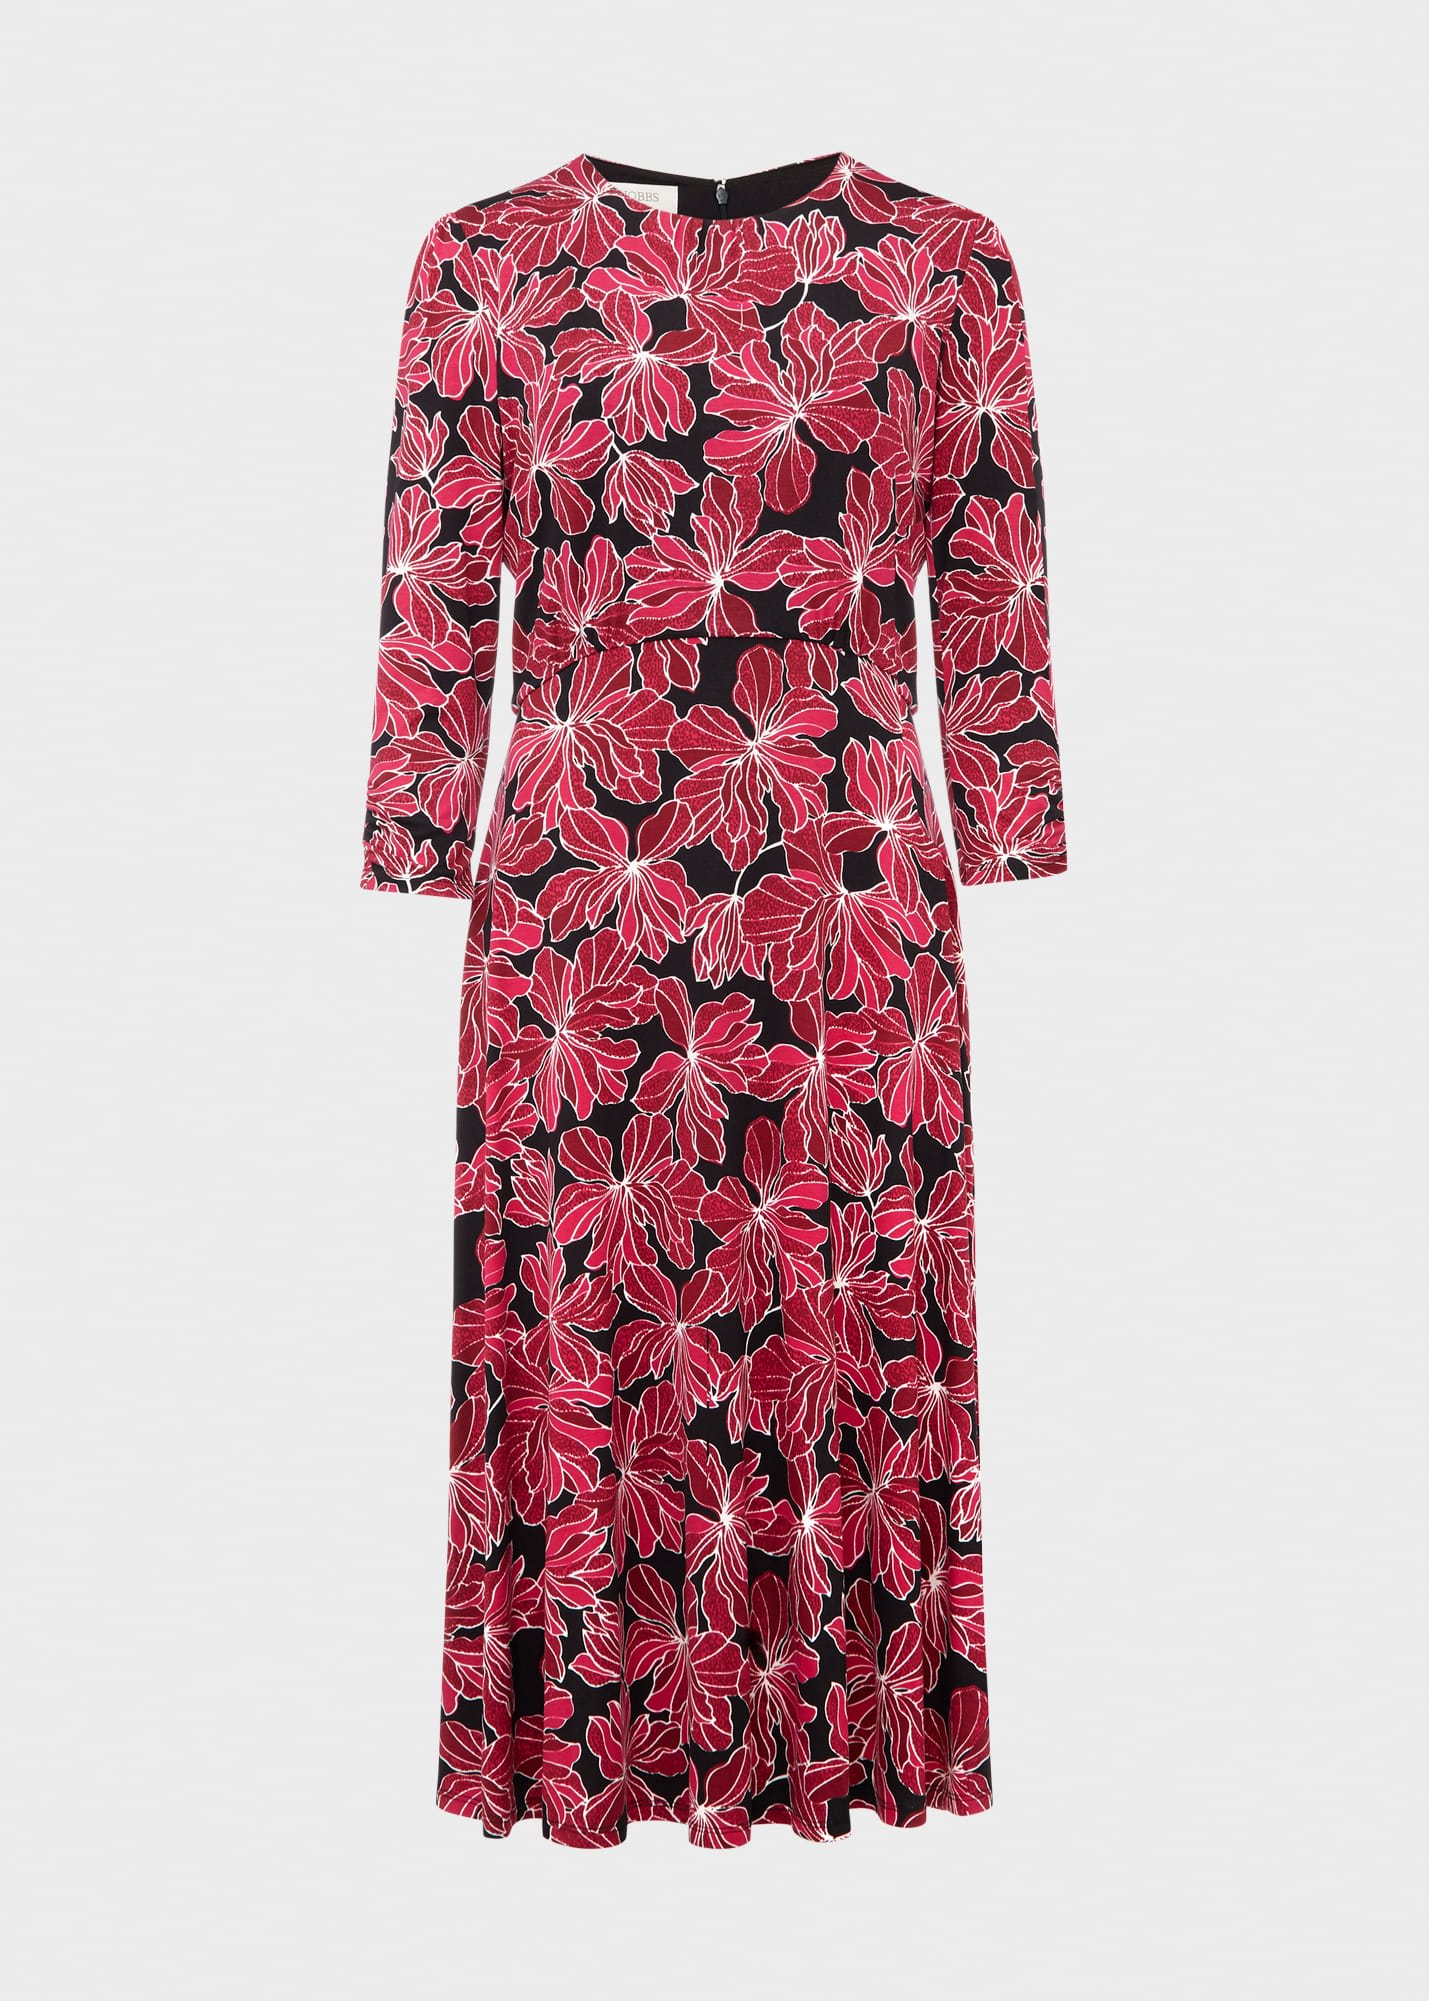 Mabel Jersey Dress 0124/5102/9324l00 Black-Pink